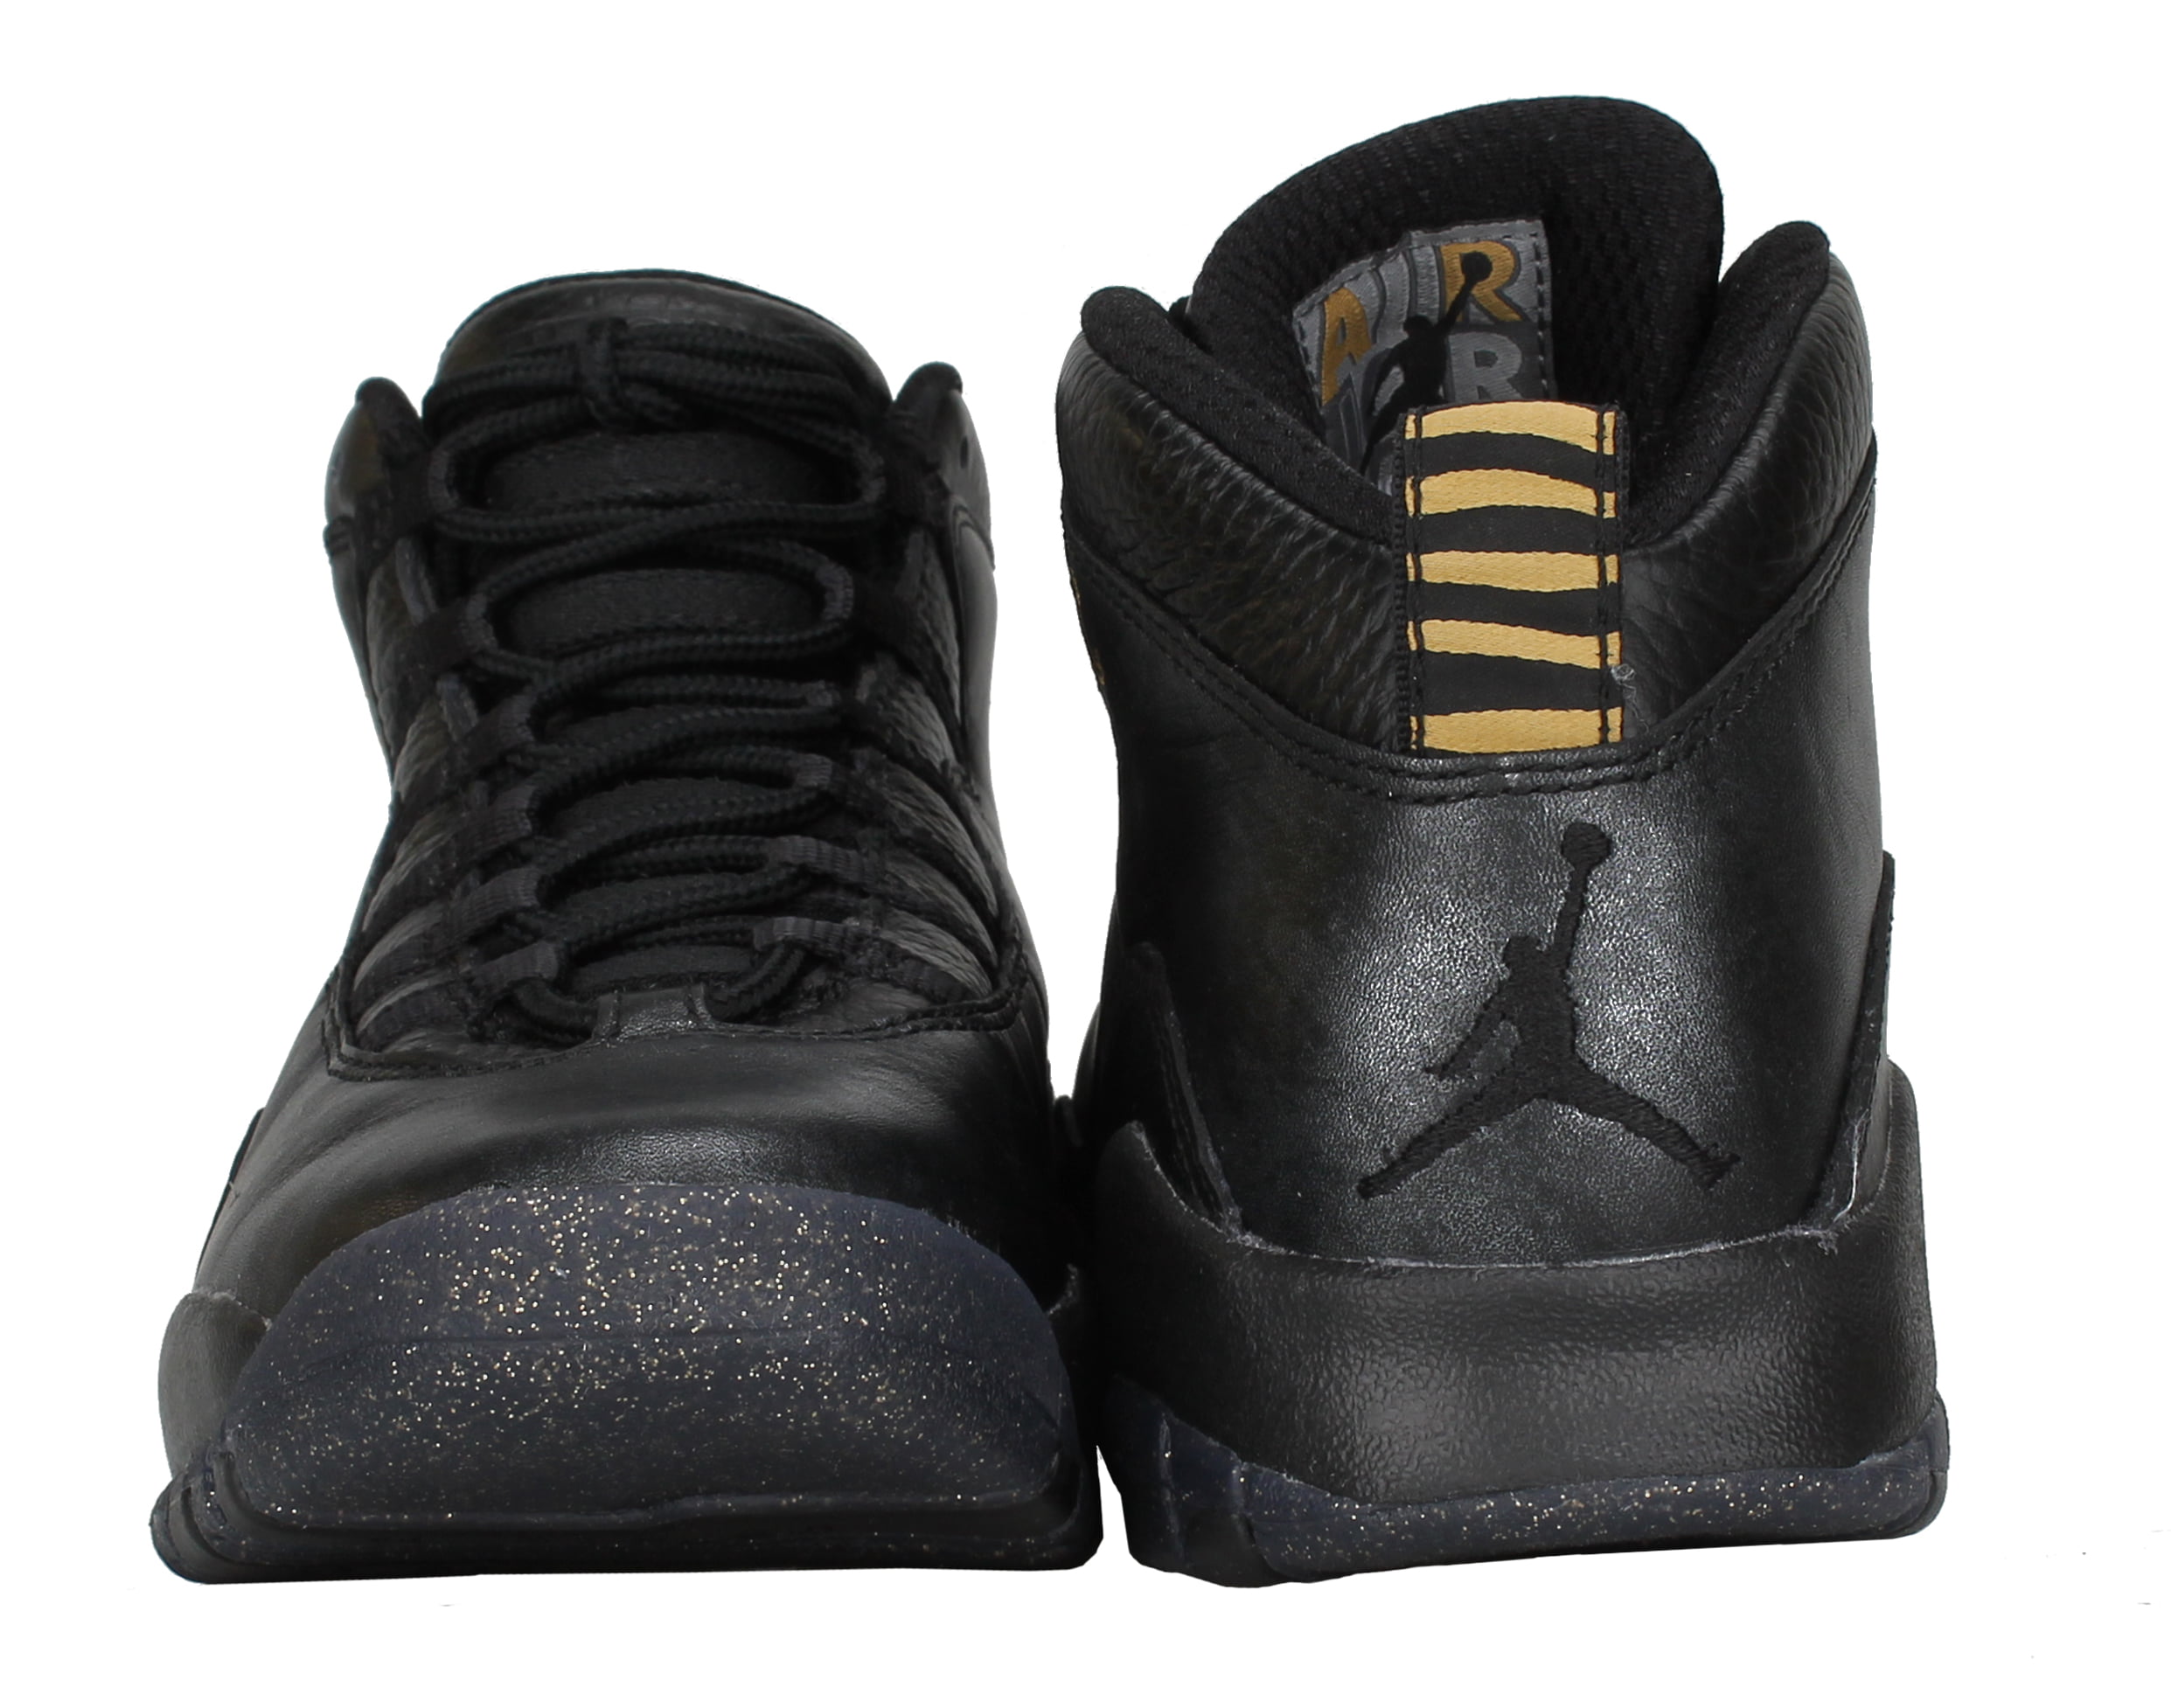 Nike Air Retro NYC BG Basketball Shoes Size 7 Walmart.com